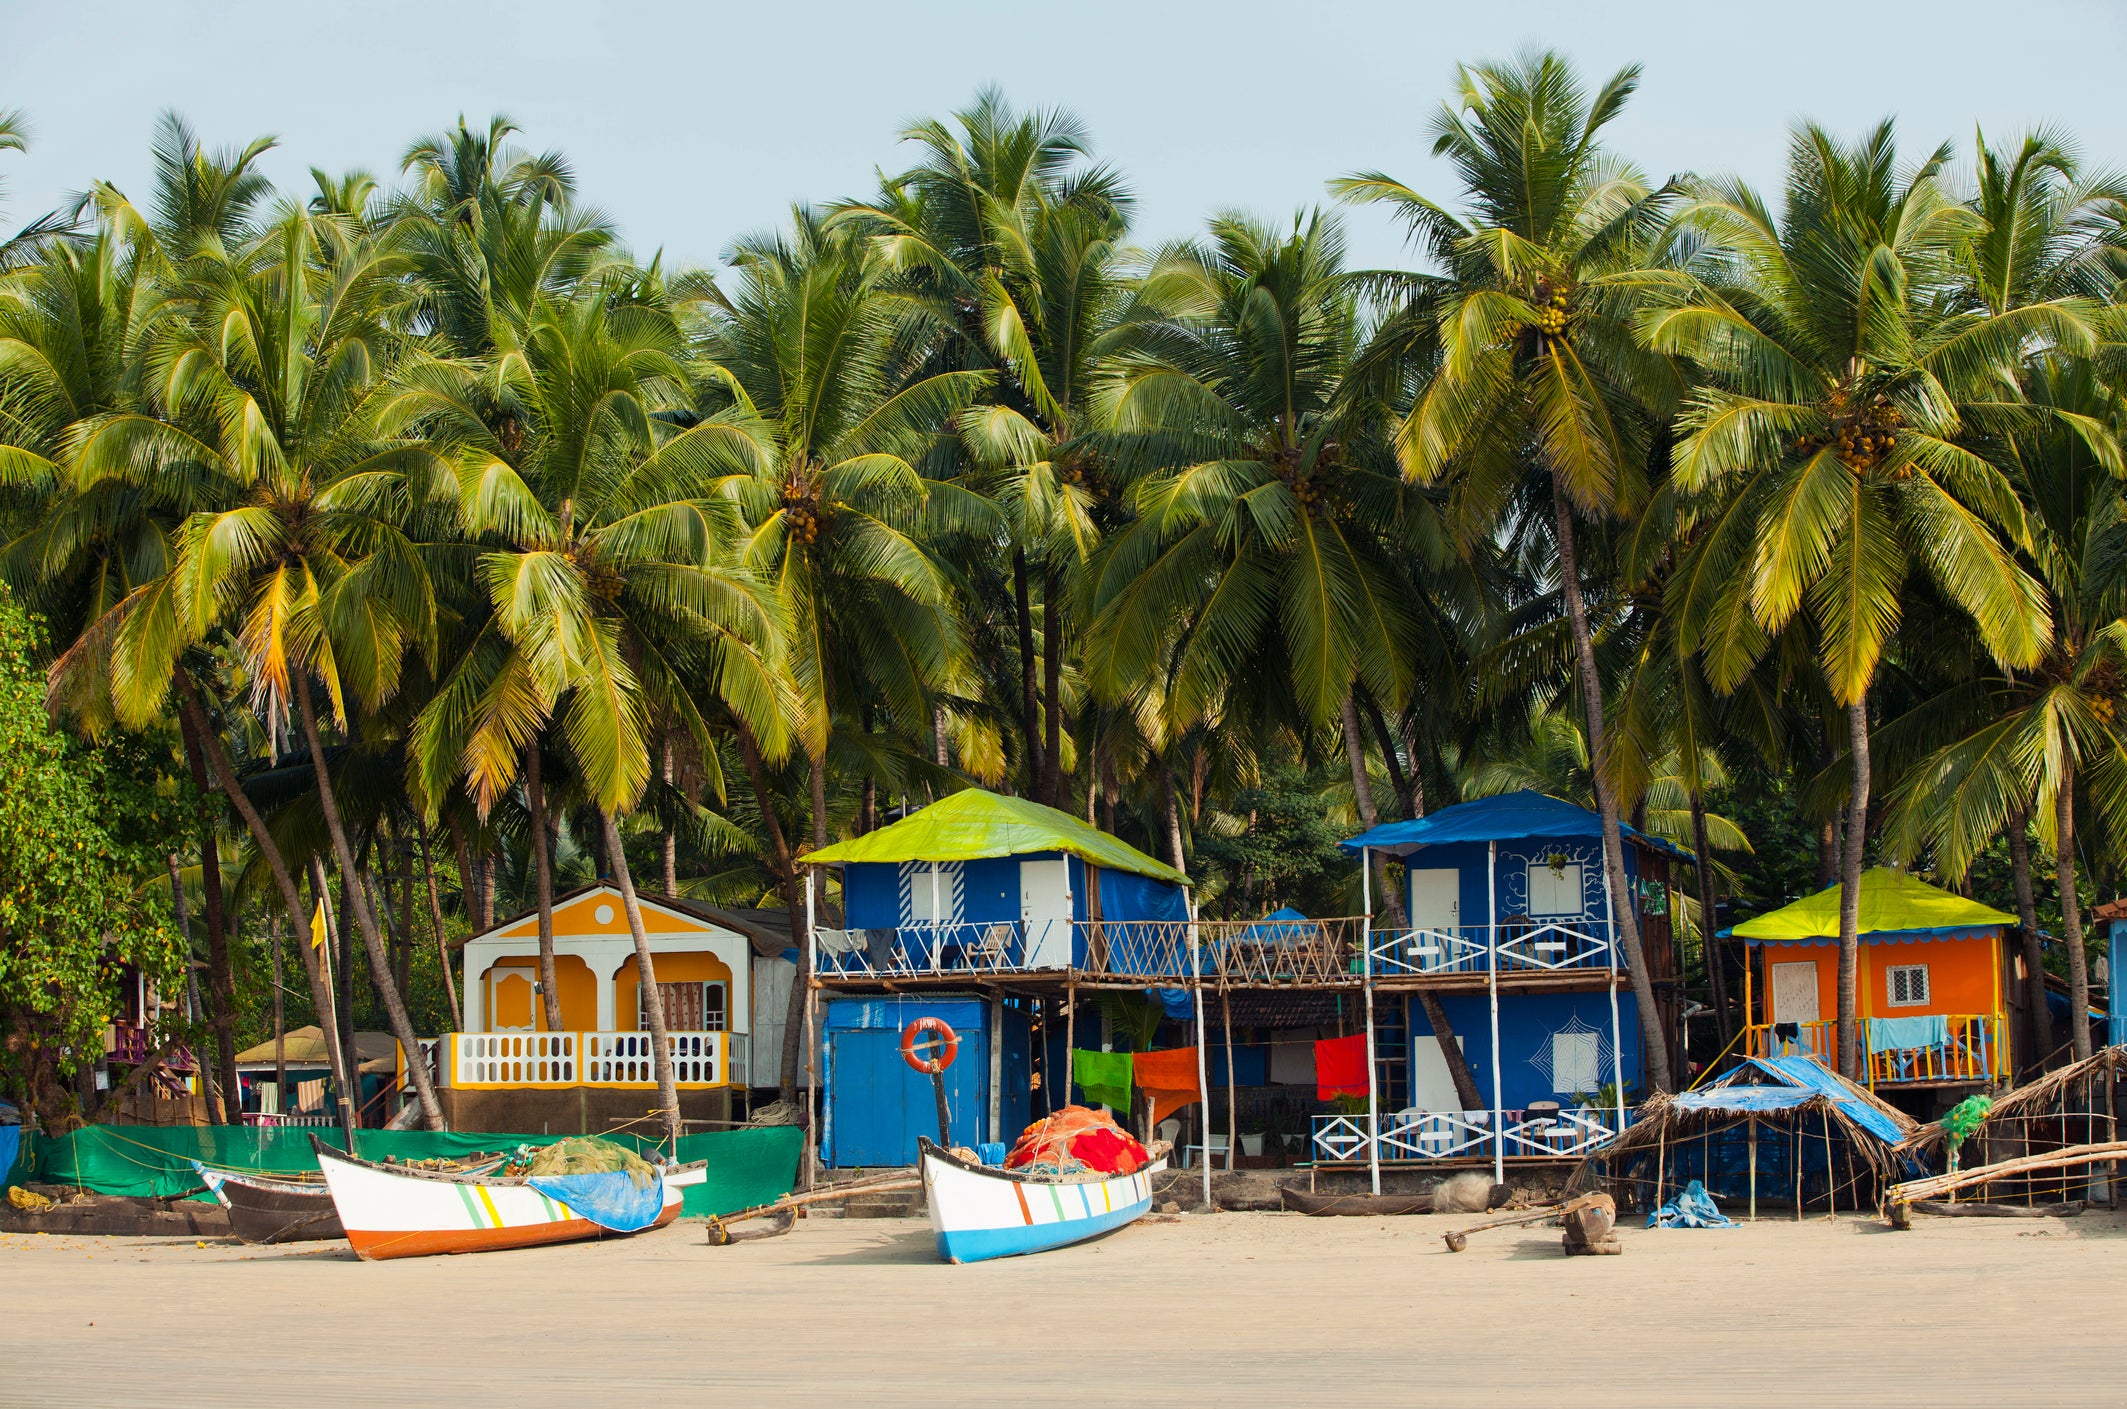 Colourful fishing boats dot Palolem Beach in Goa, South India